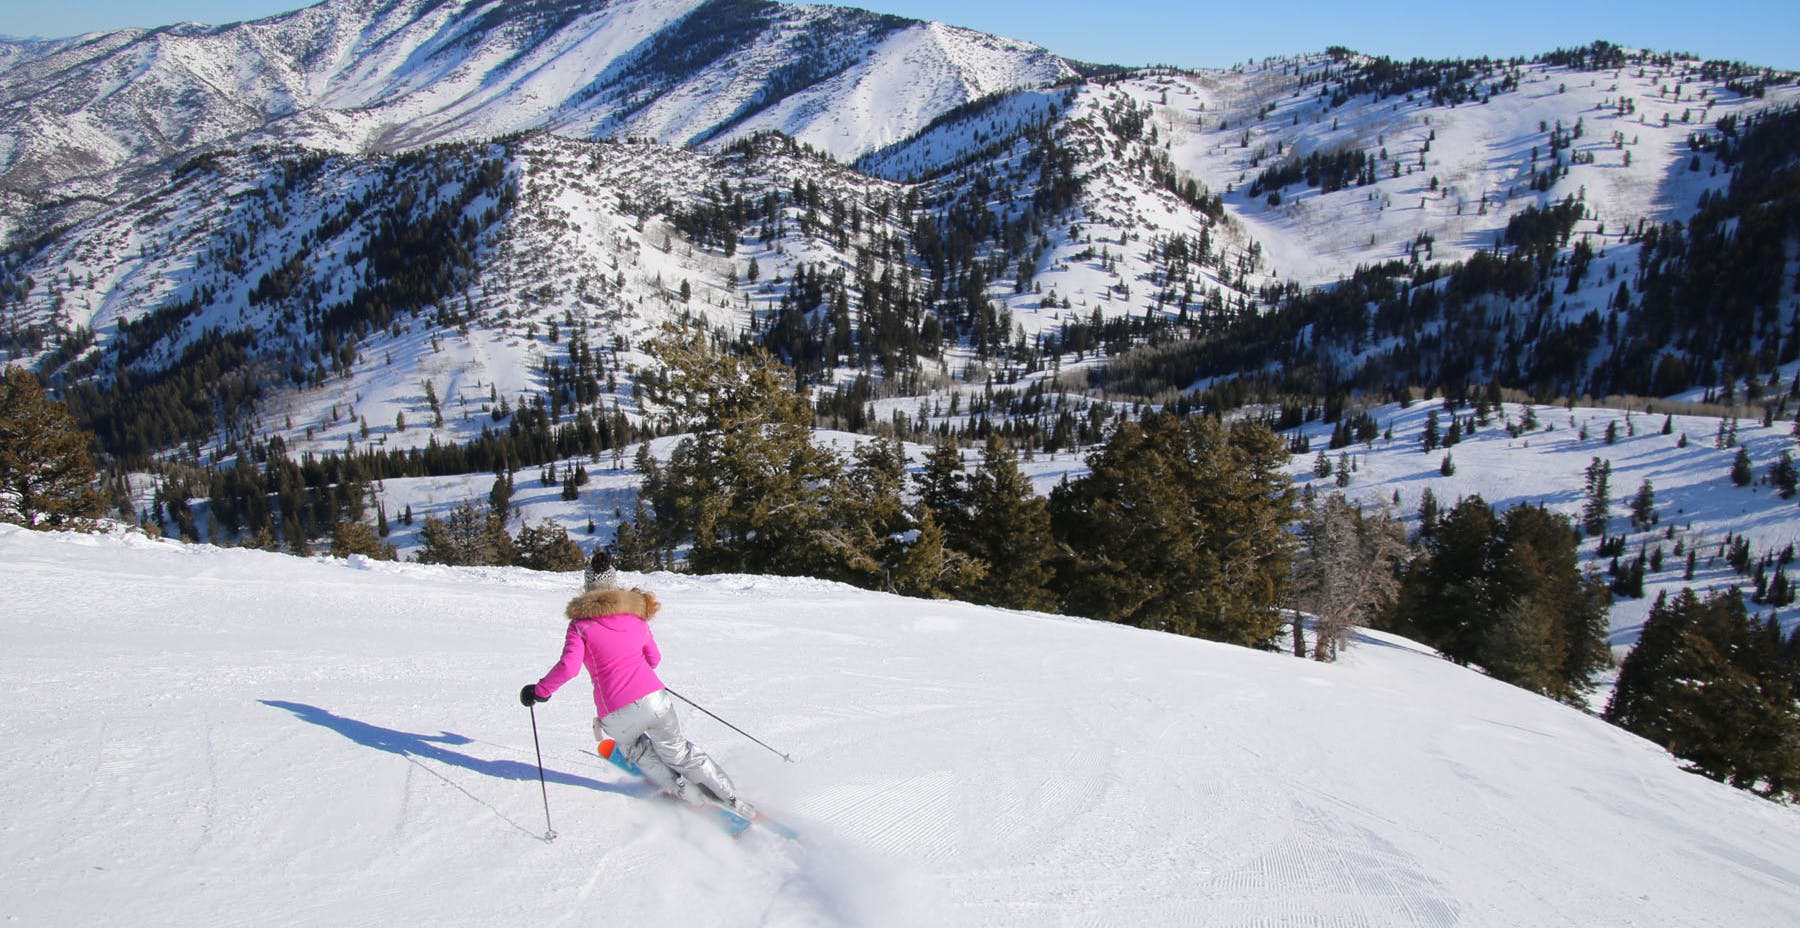 Skiing in Powder Mountain